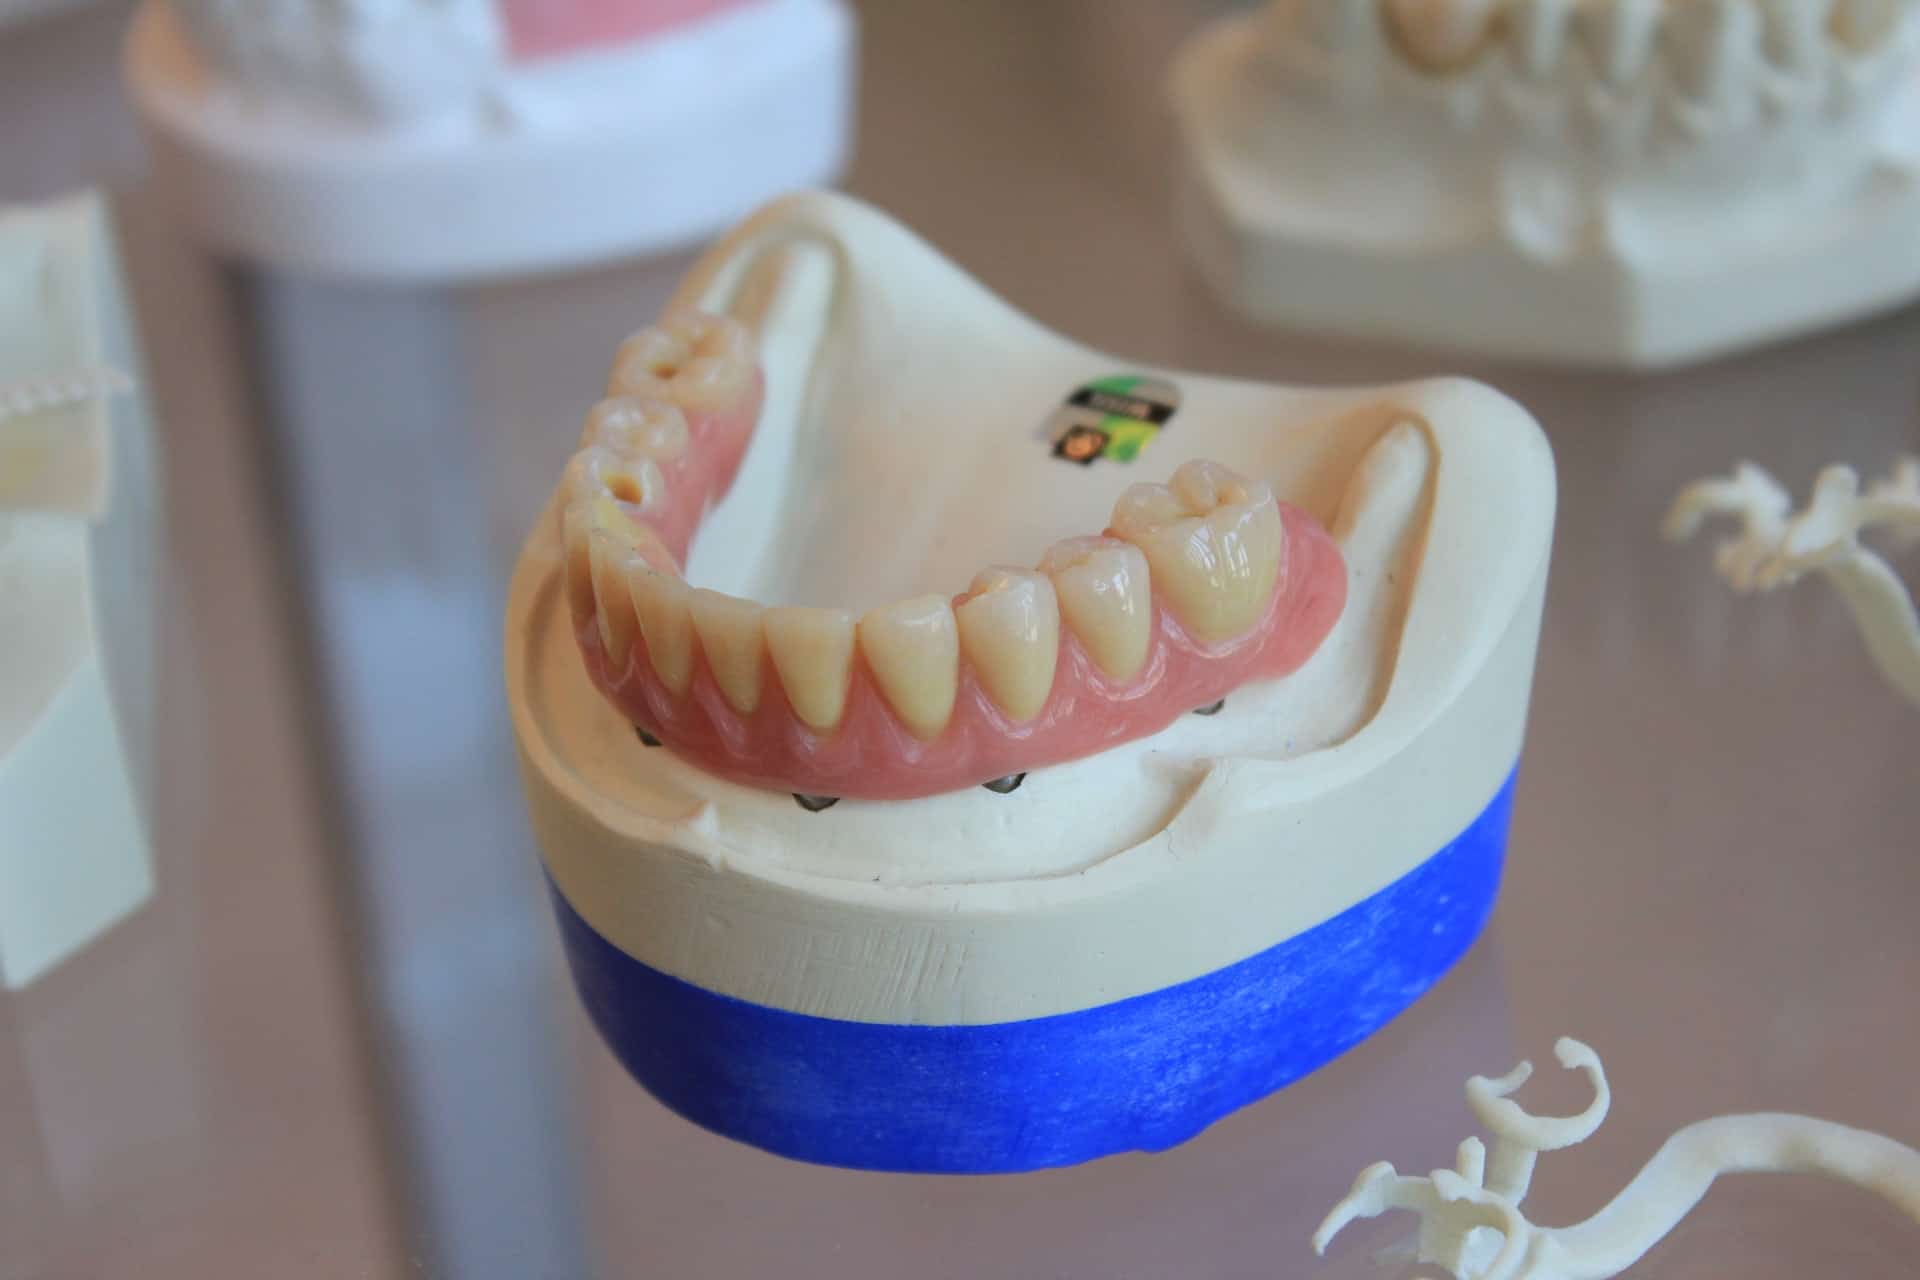 rheumatoid arthritis - model of teeth and gums